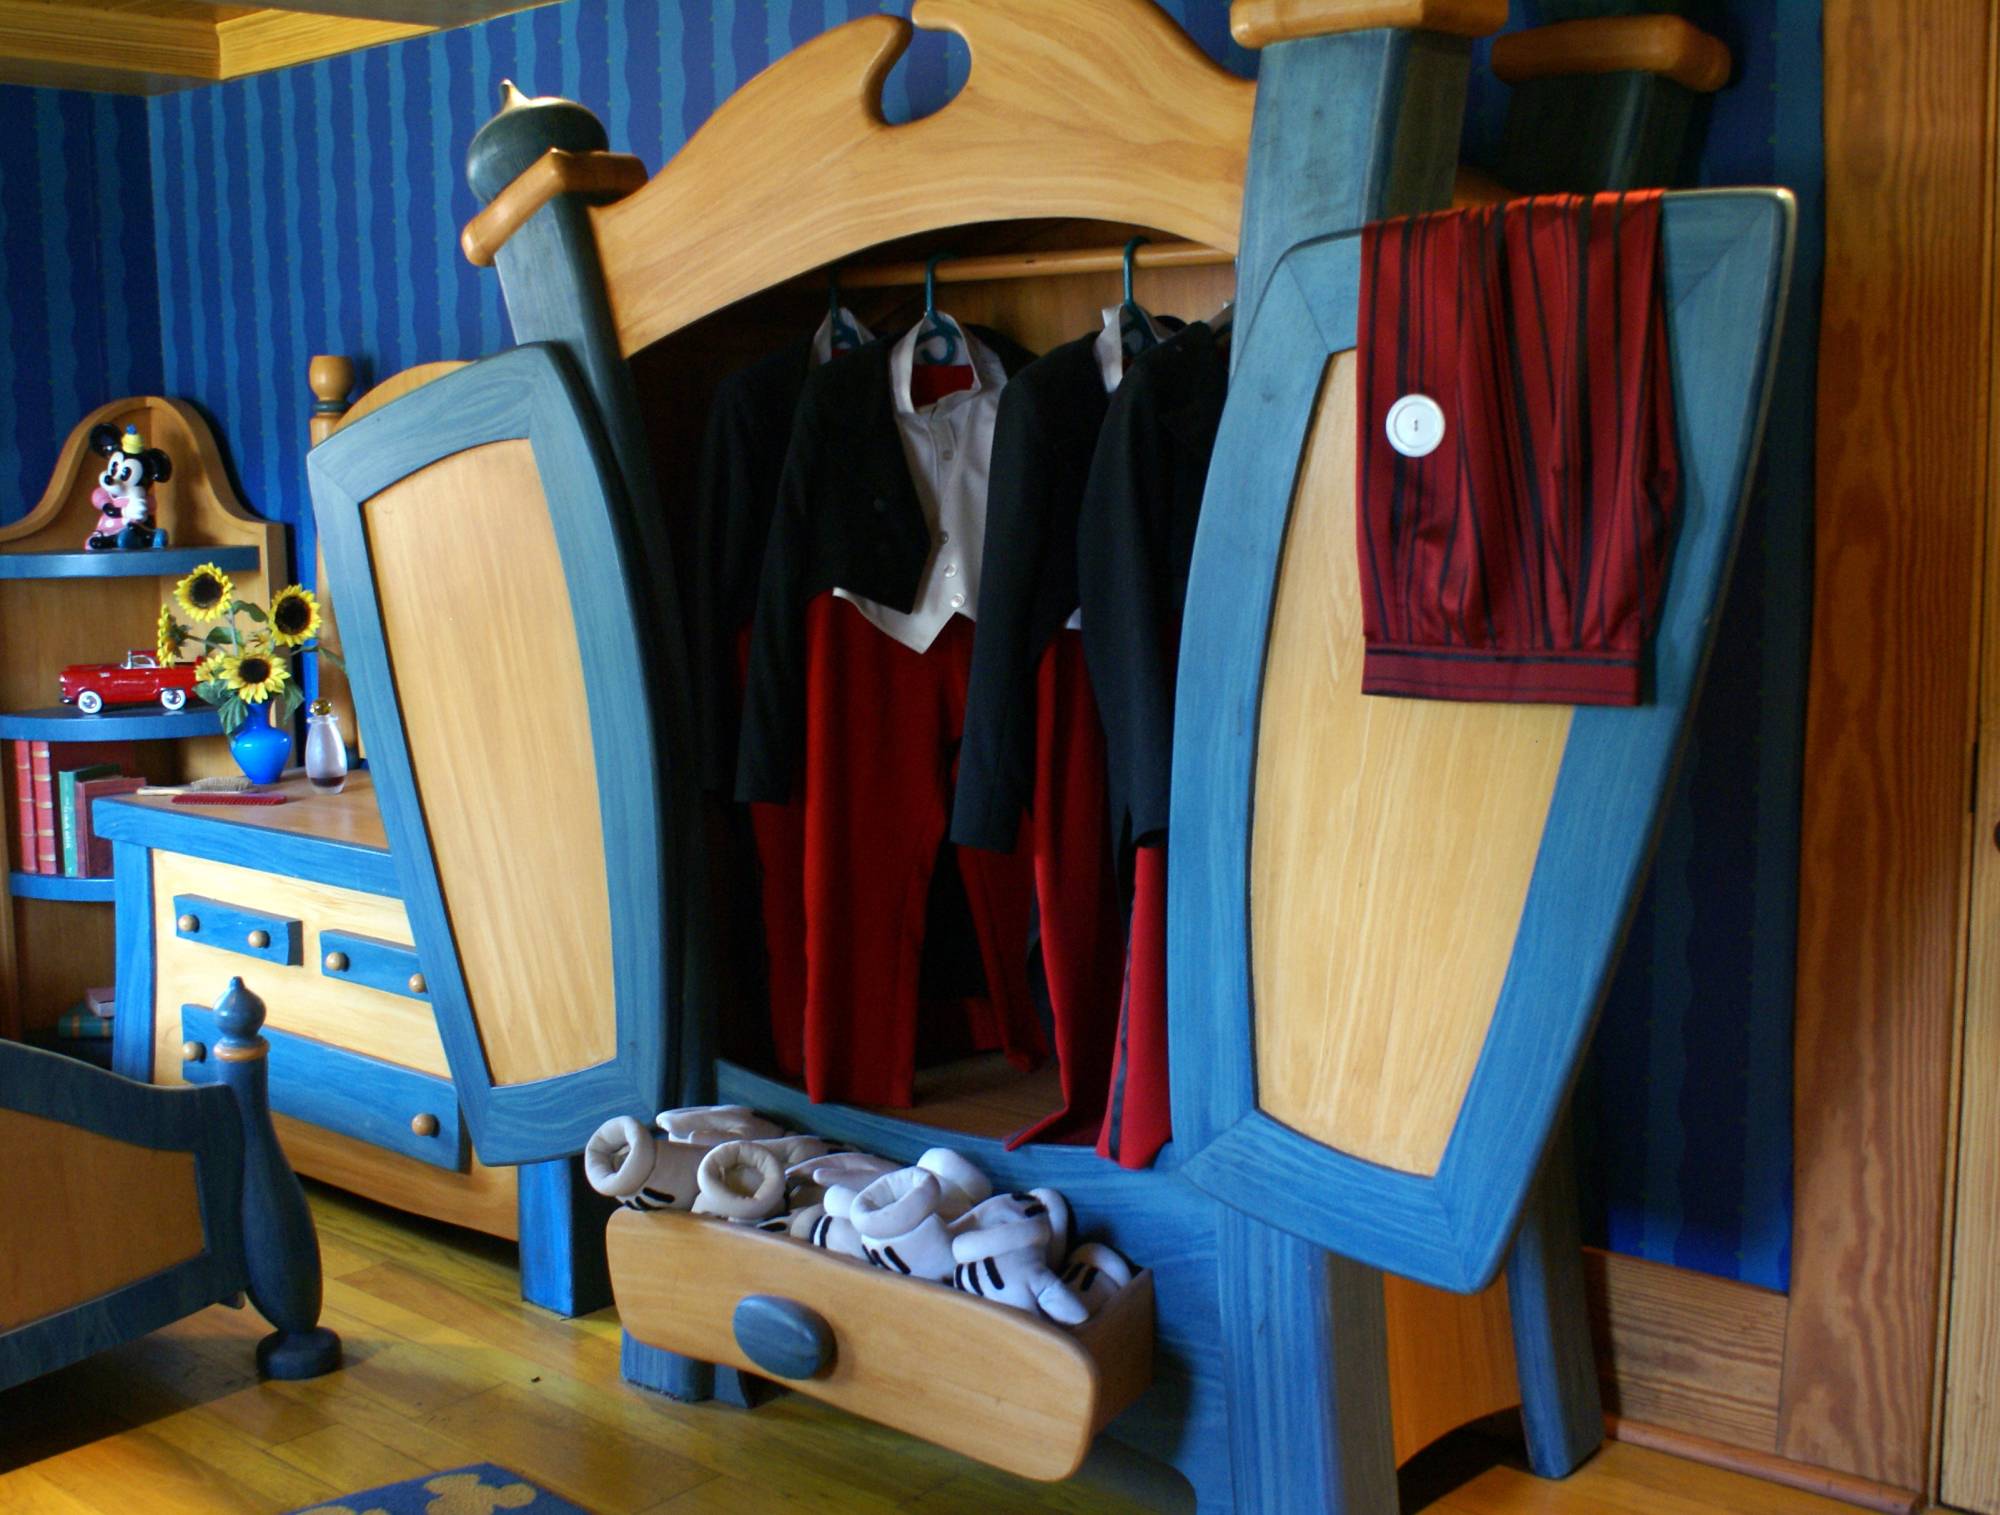 Magic Kingdom - Mickeys Toontown Fair